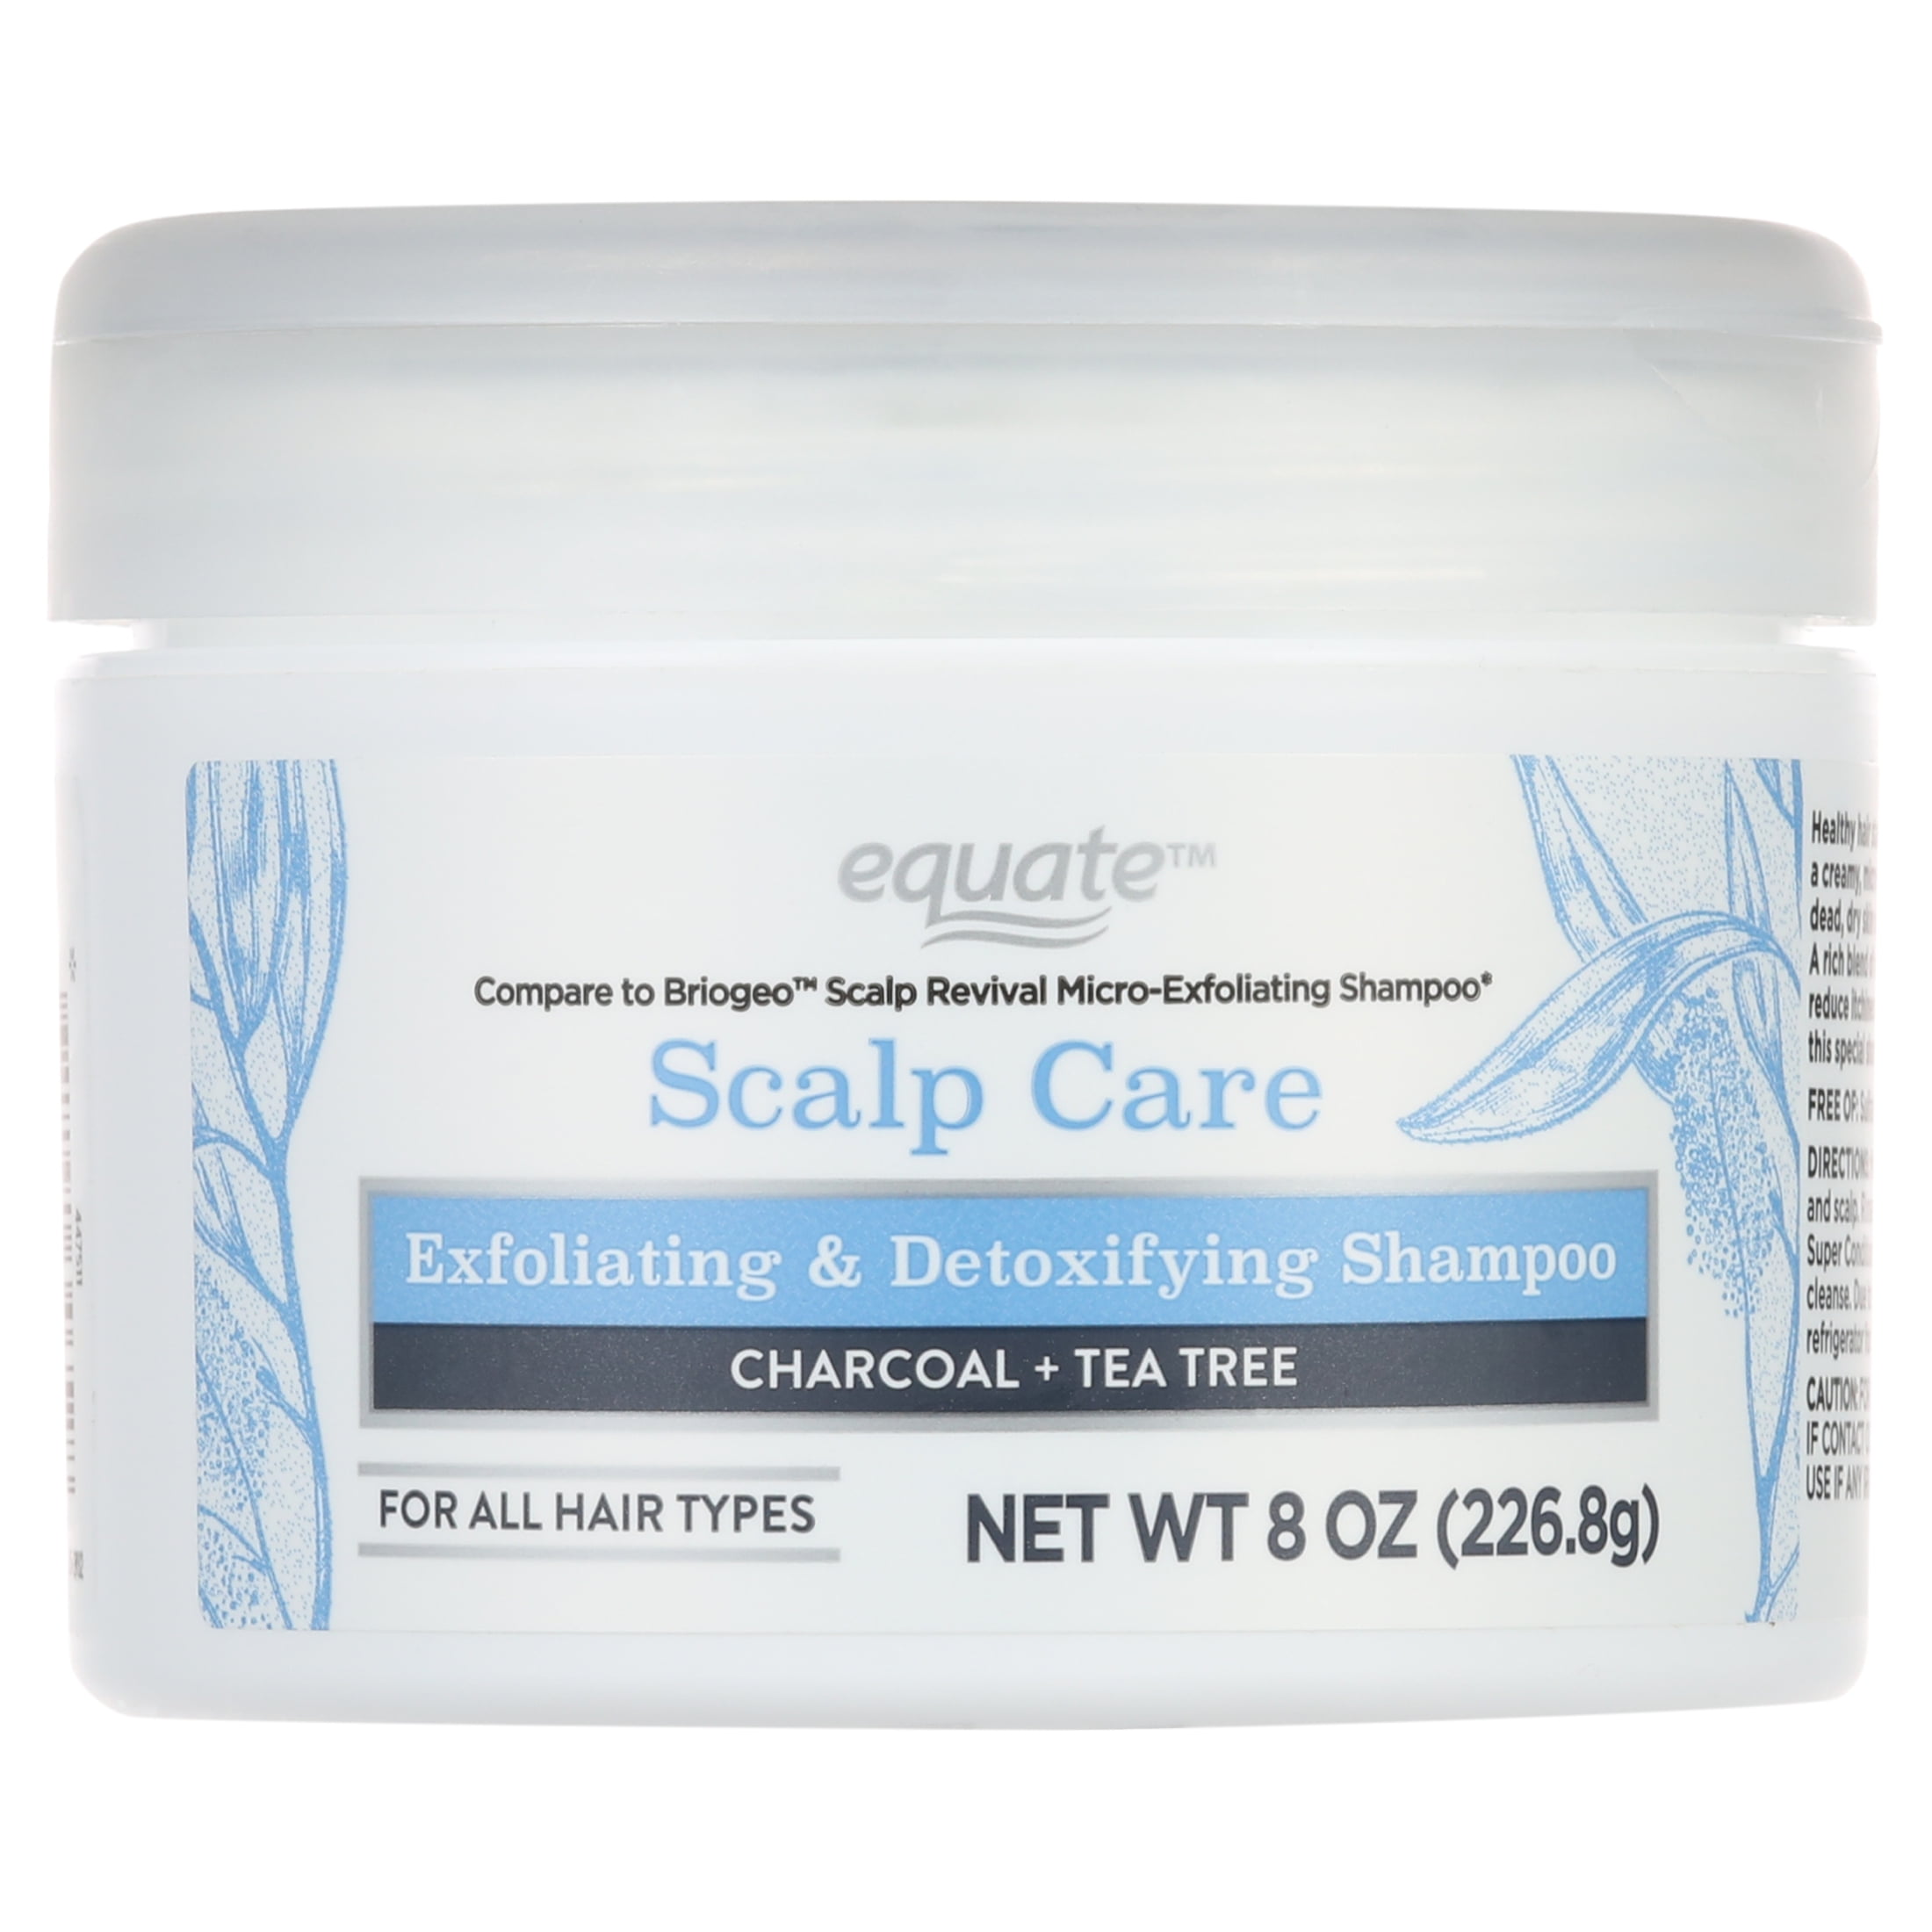 Scalp Care & Detoxifying Daily Shampoo with Charcoal + Tea Tree, 8 Fl oz - Walmart.com